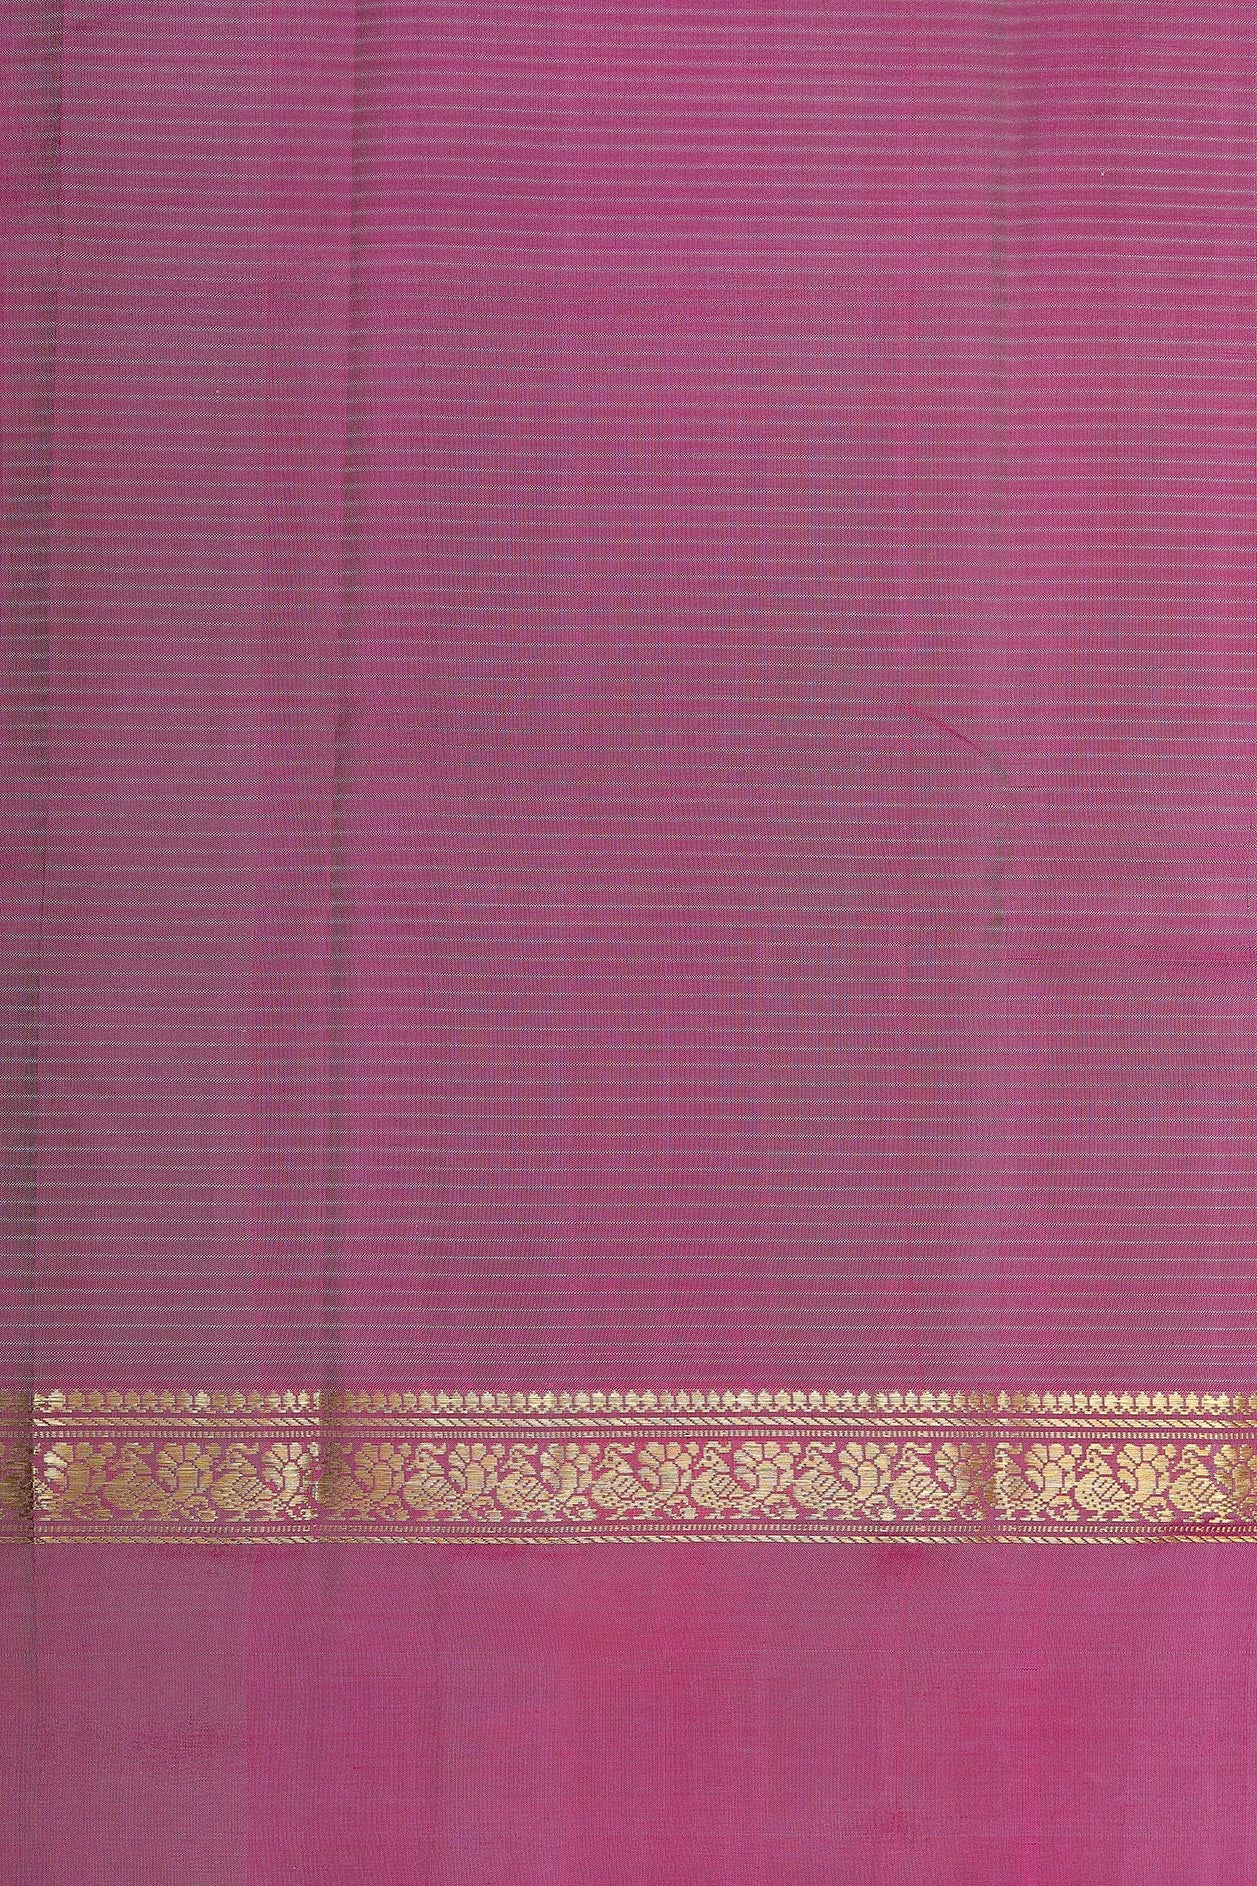 Ganga Jamuna Peacock Border In Self Stripes Grey Kanchipuram Silk Saree